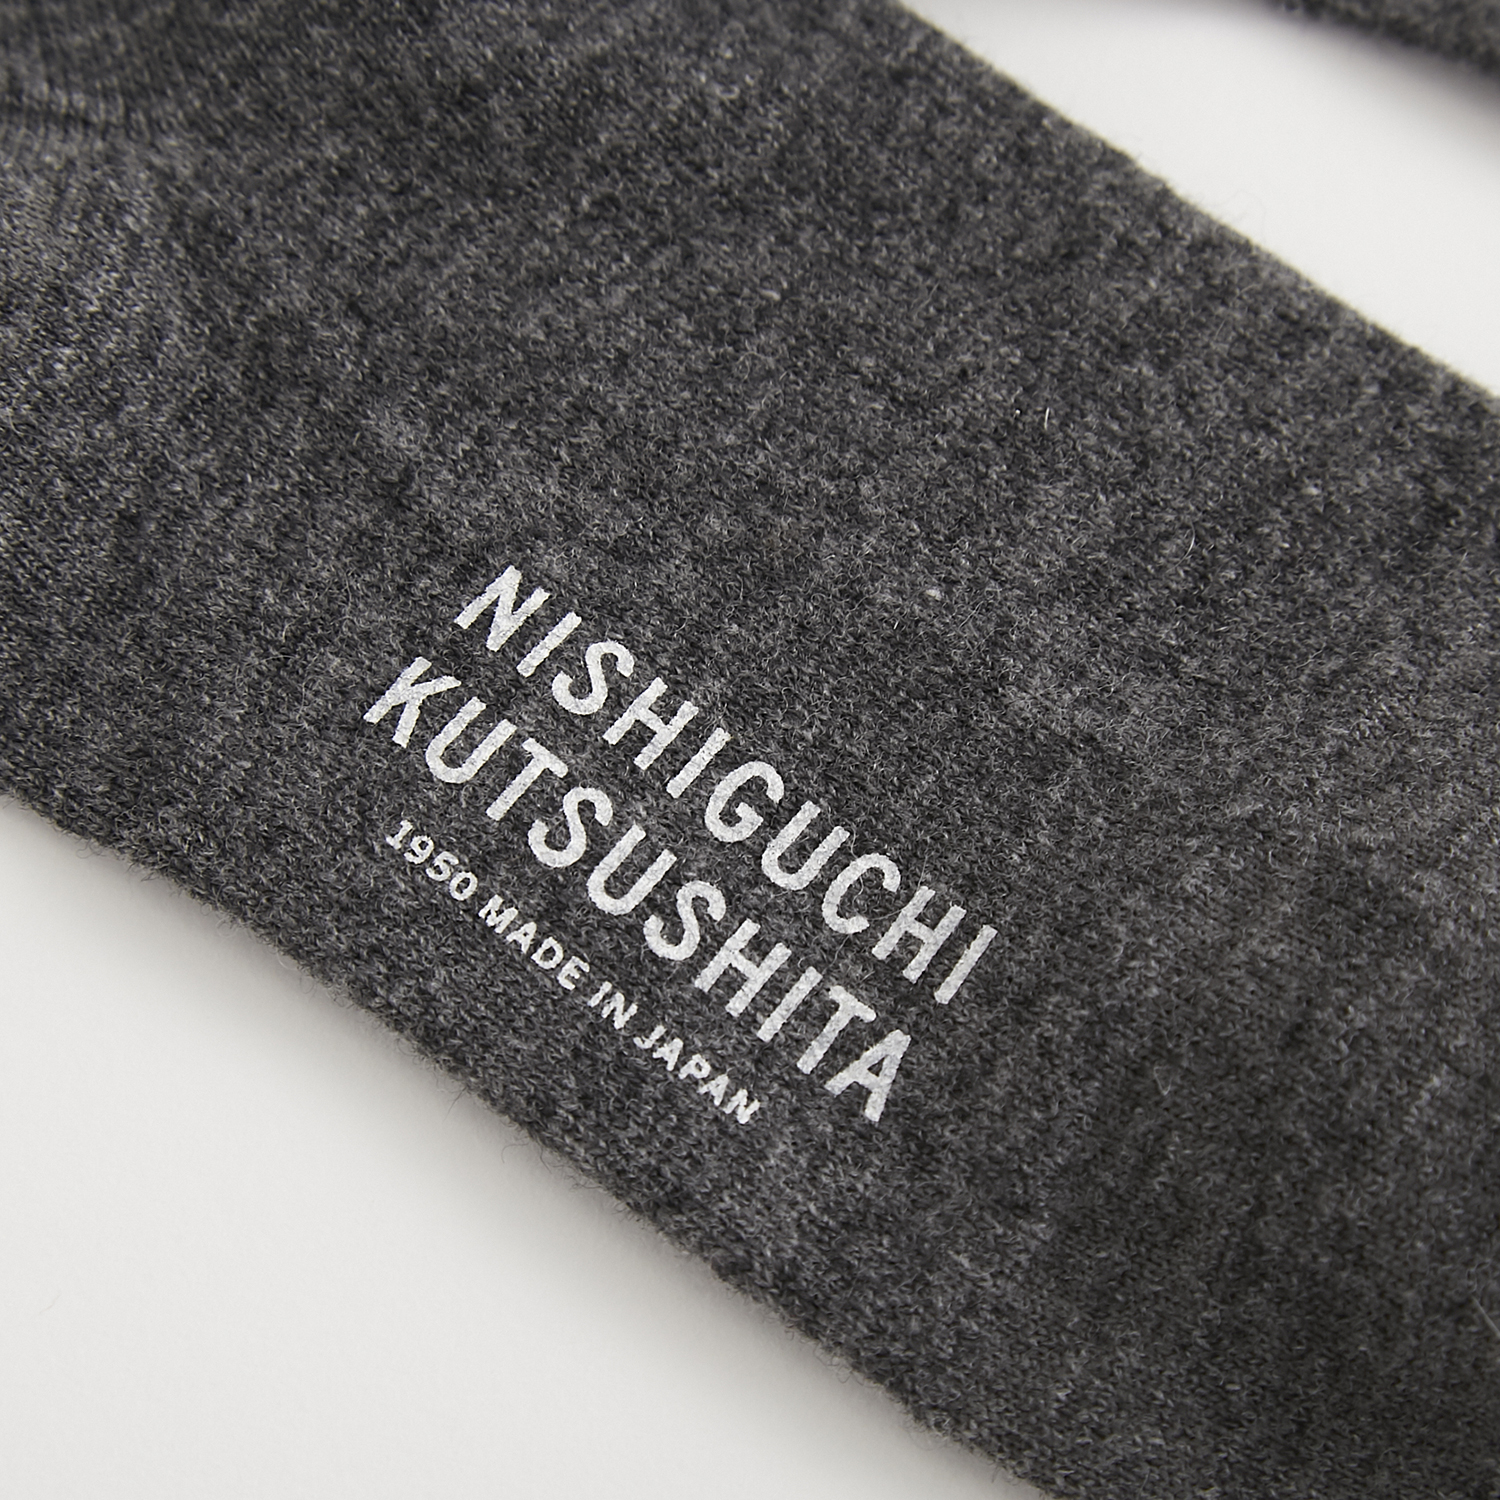 NISHIGUCHI KUTSUSHITA/カシミヤウールソックス